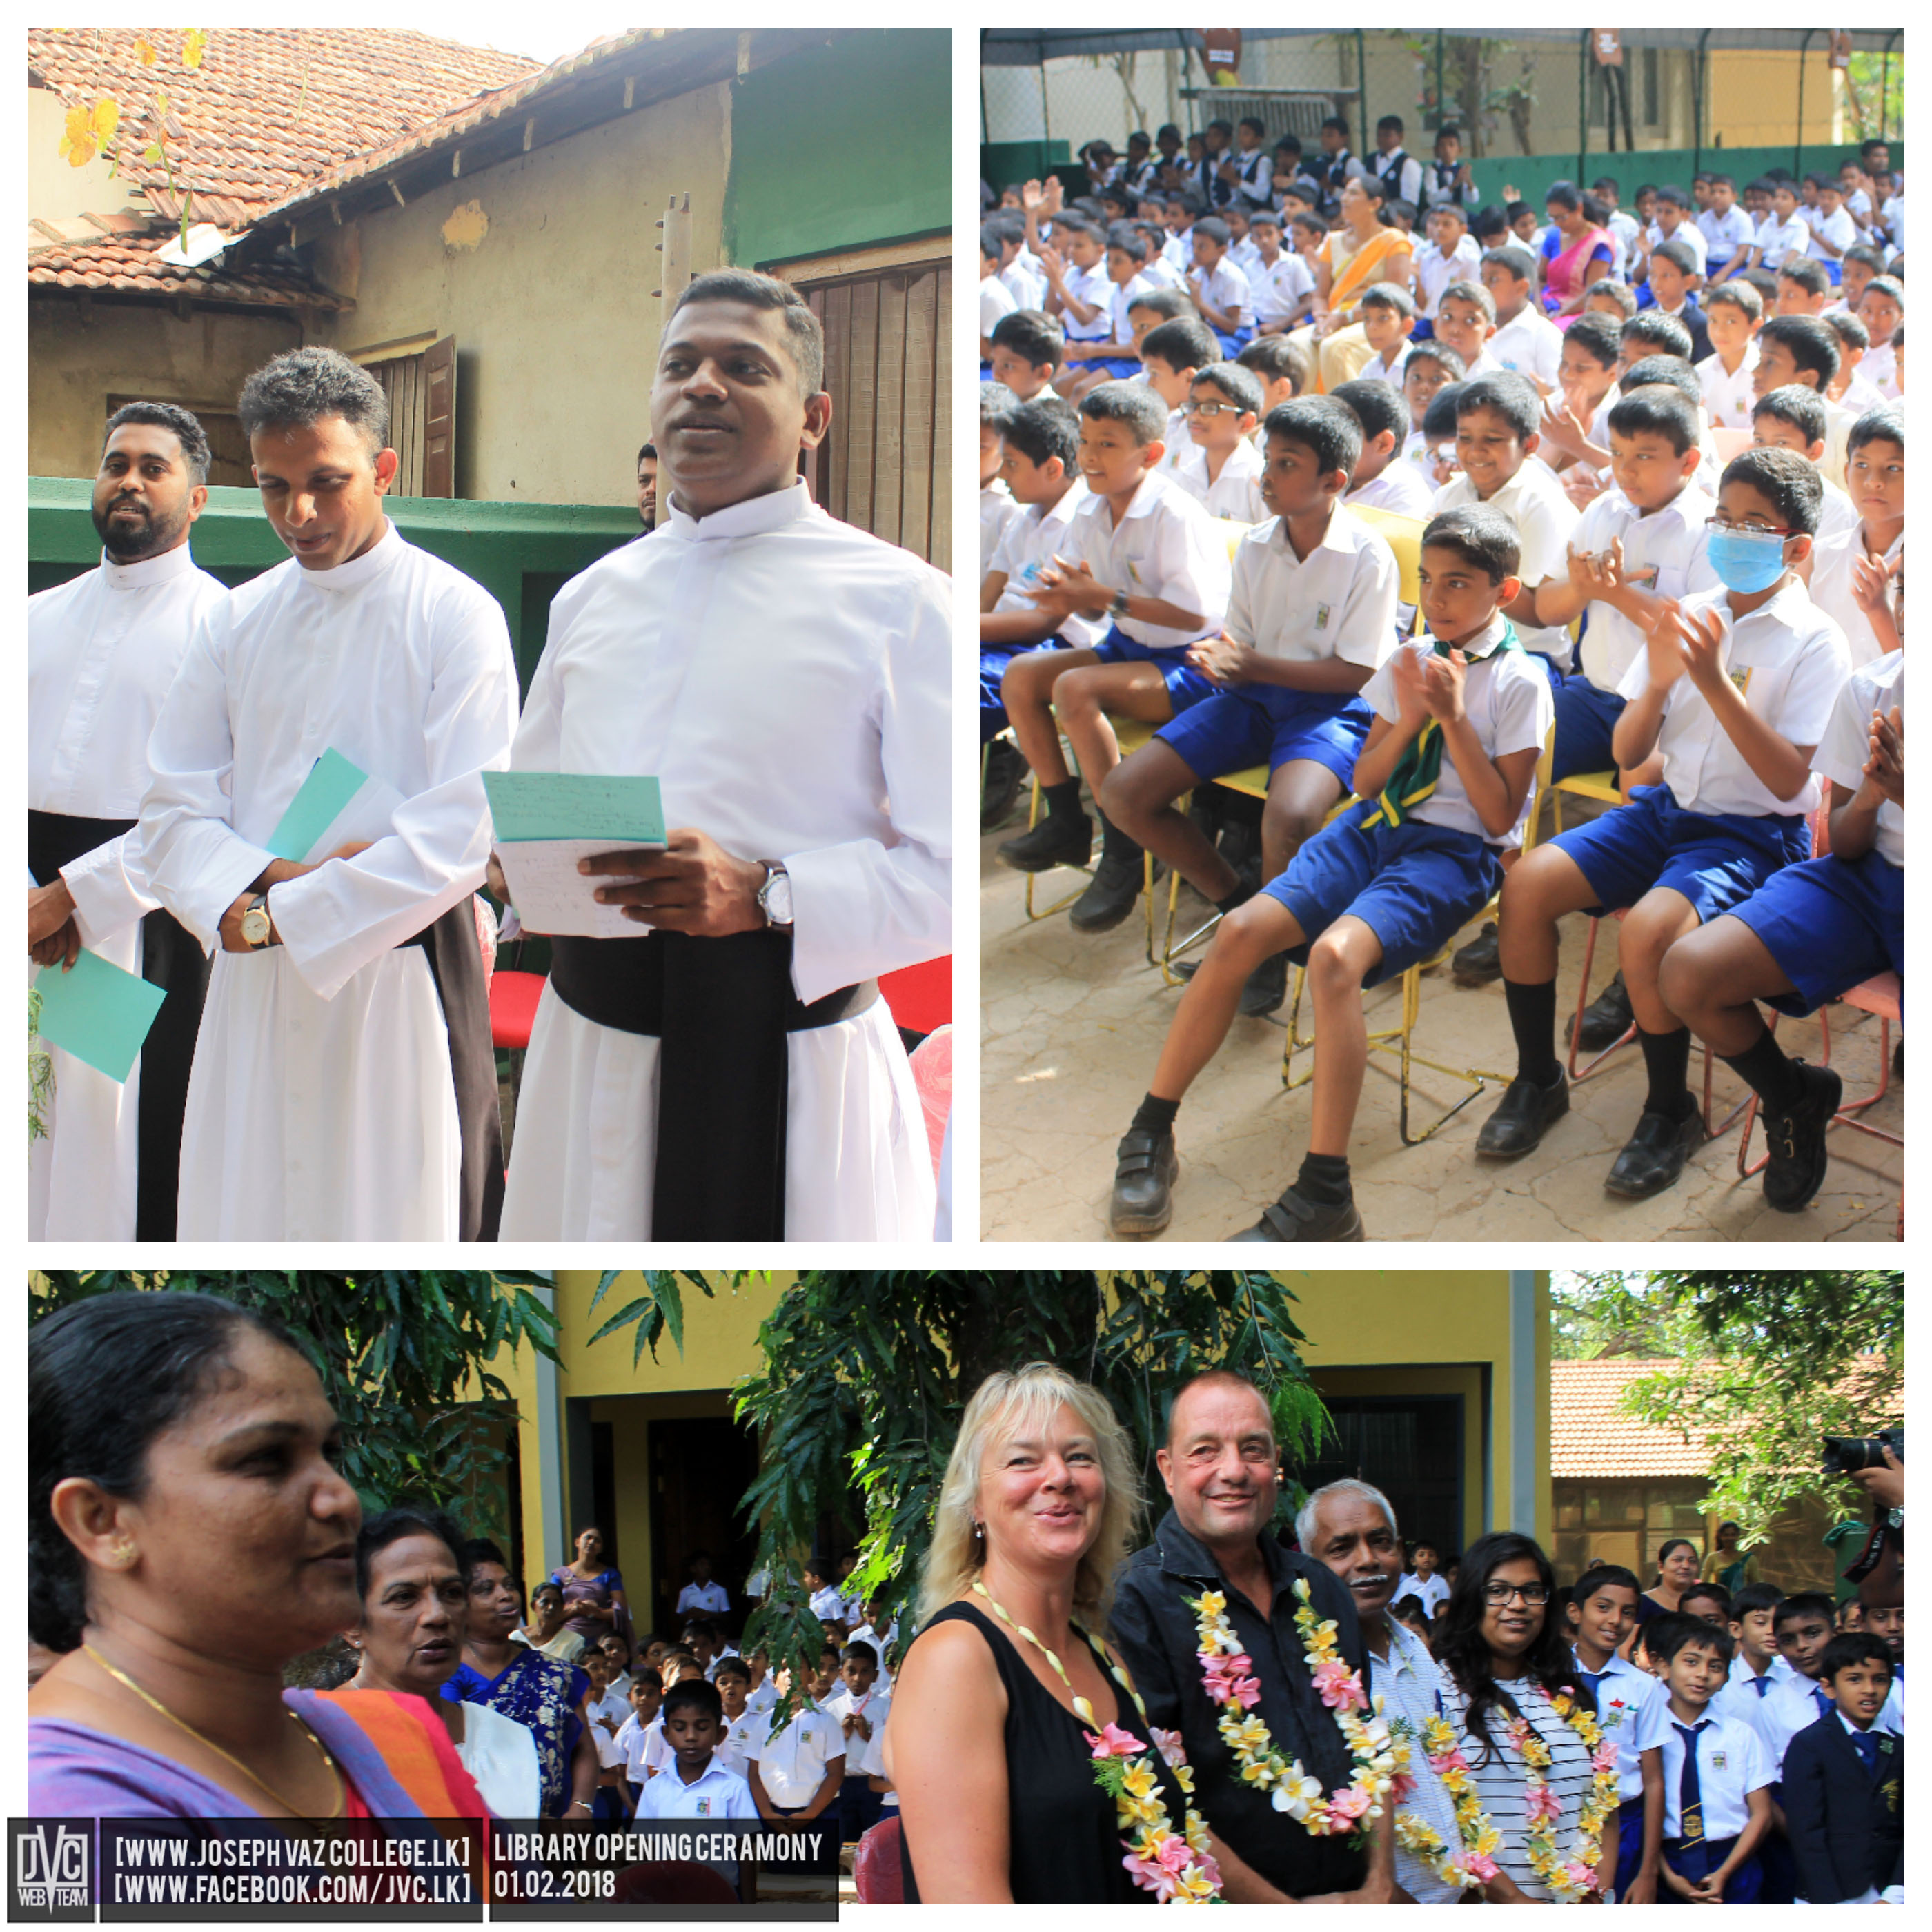 Library Opening Ceremony - Primary Section - St. Joseph Vaz College - Wennappuwa - Sri Lanka